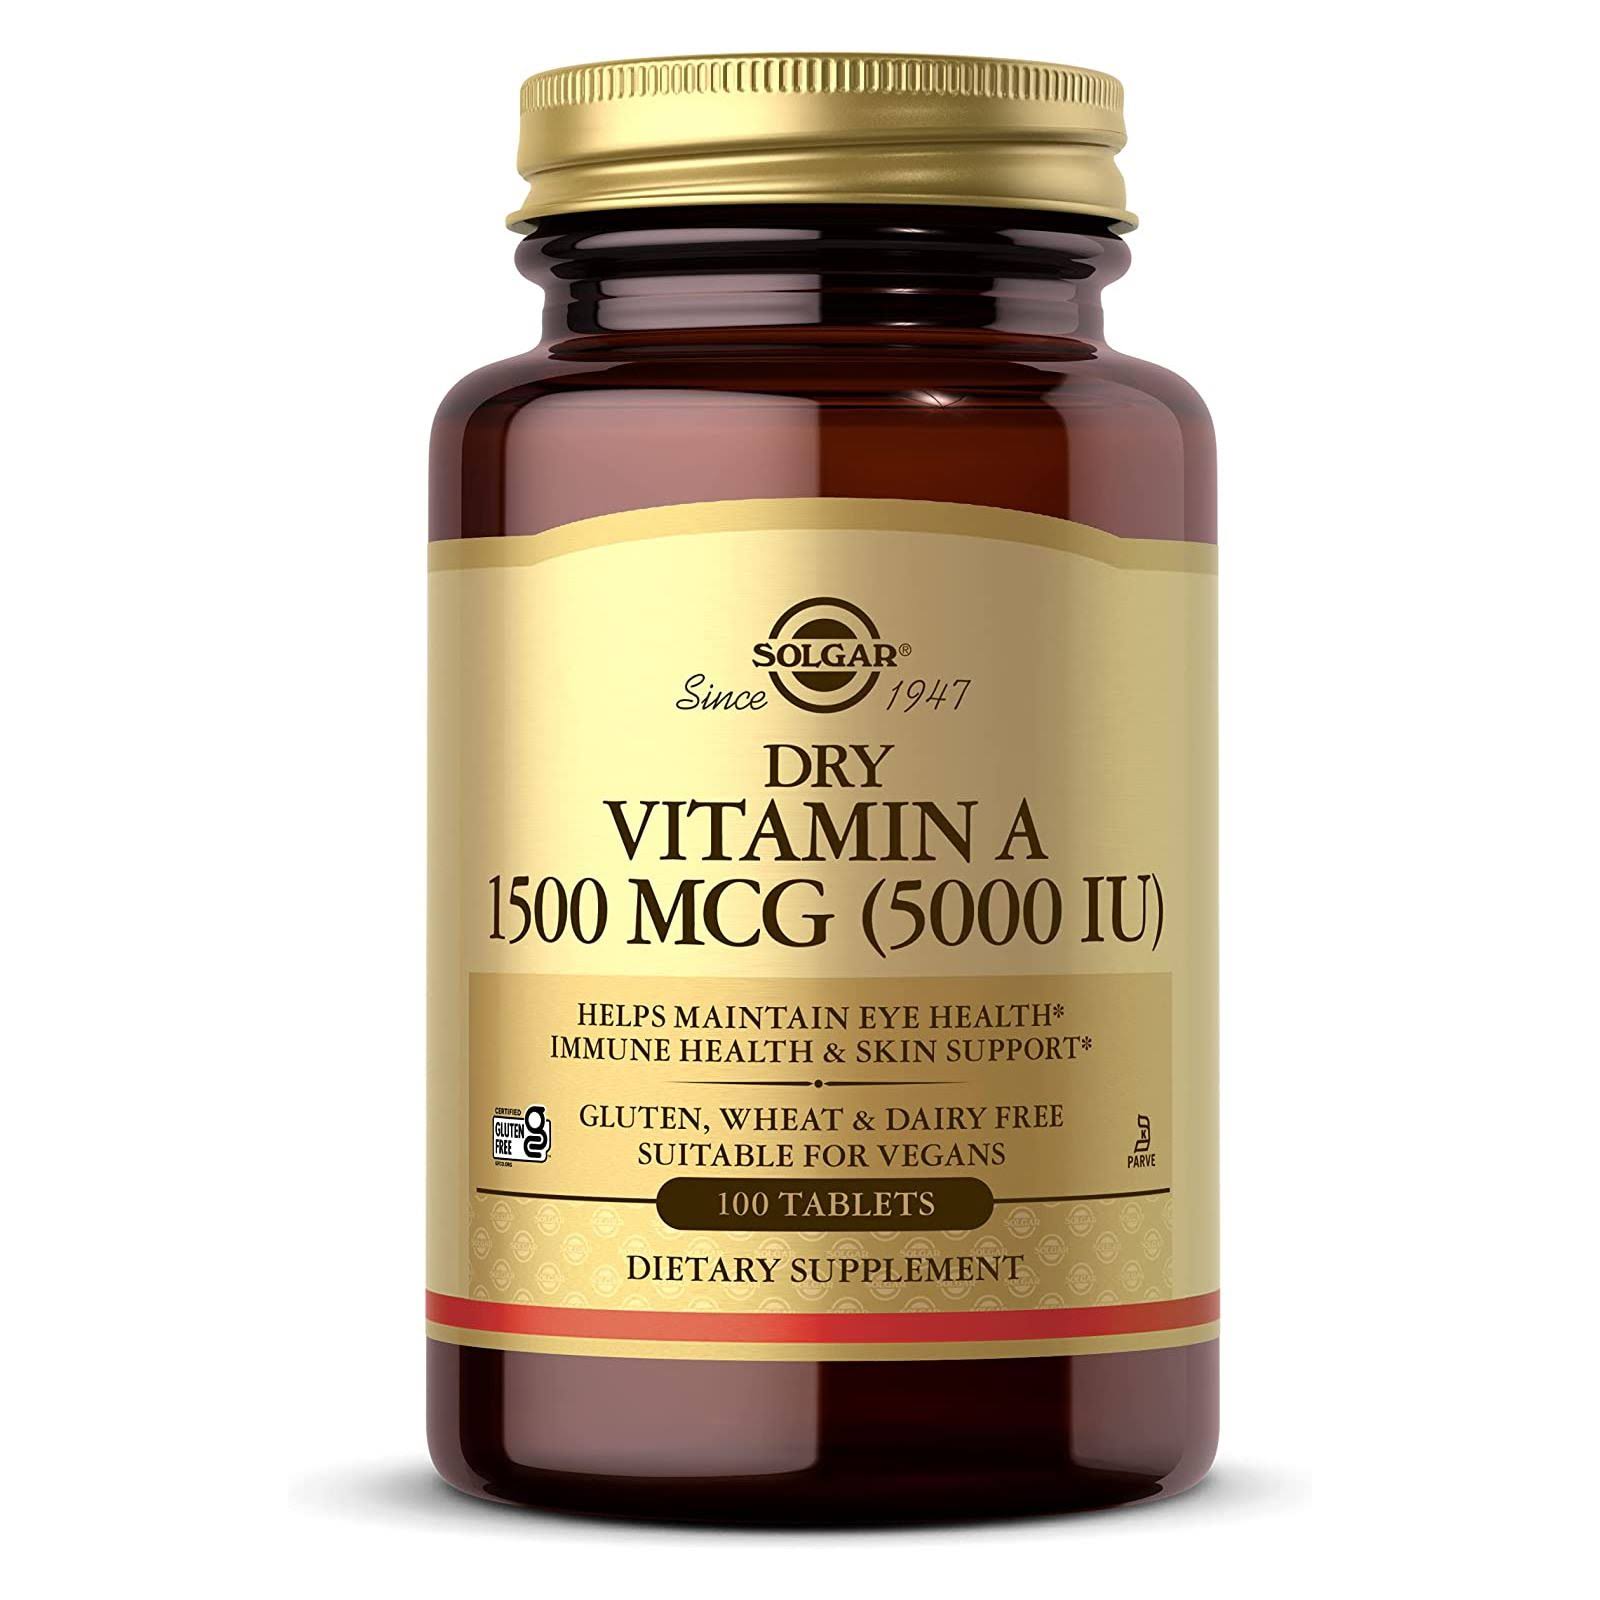 Solgar Dry Vitamin A Dietary Supplement - 100 Tablets